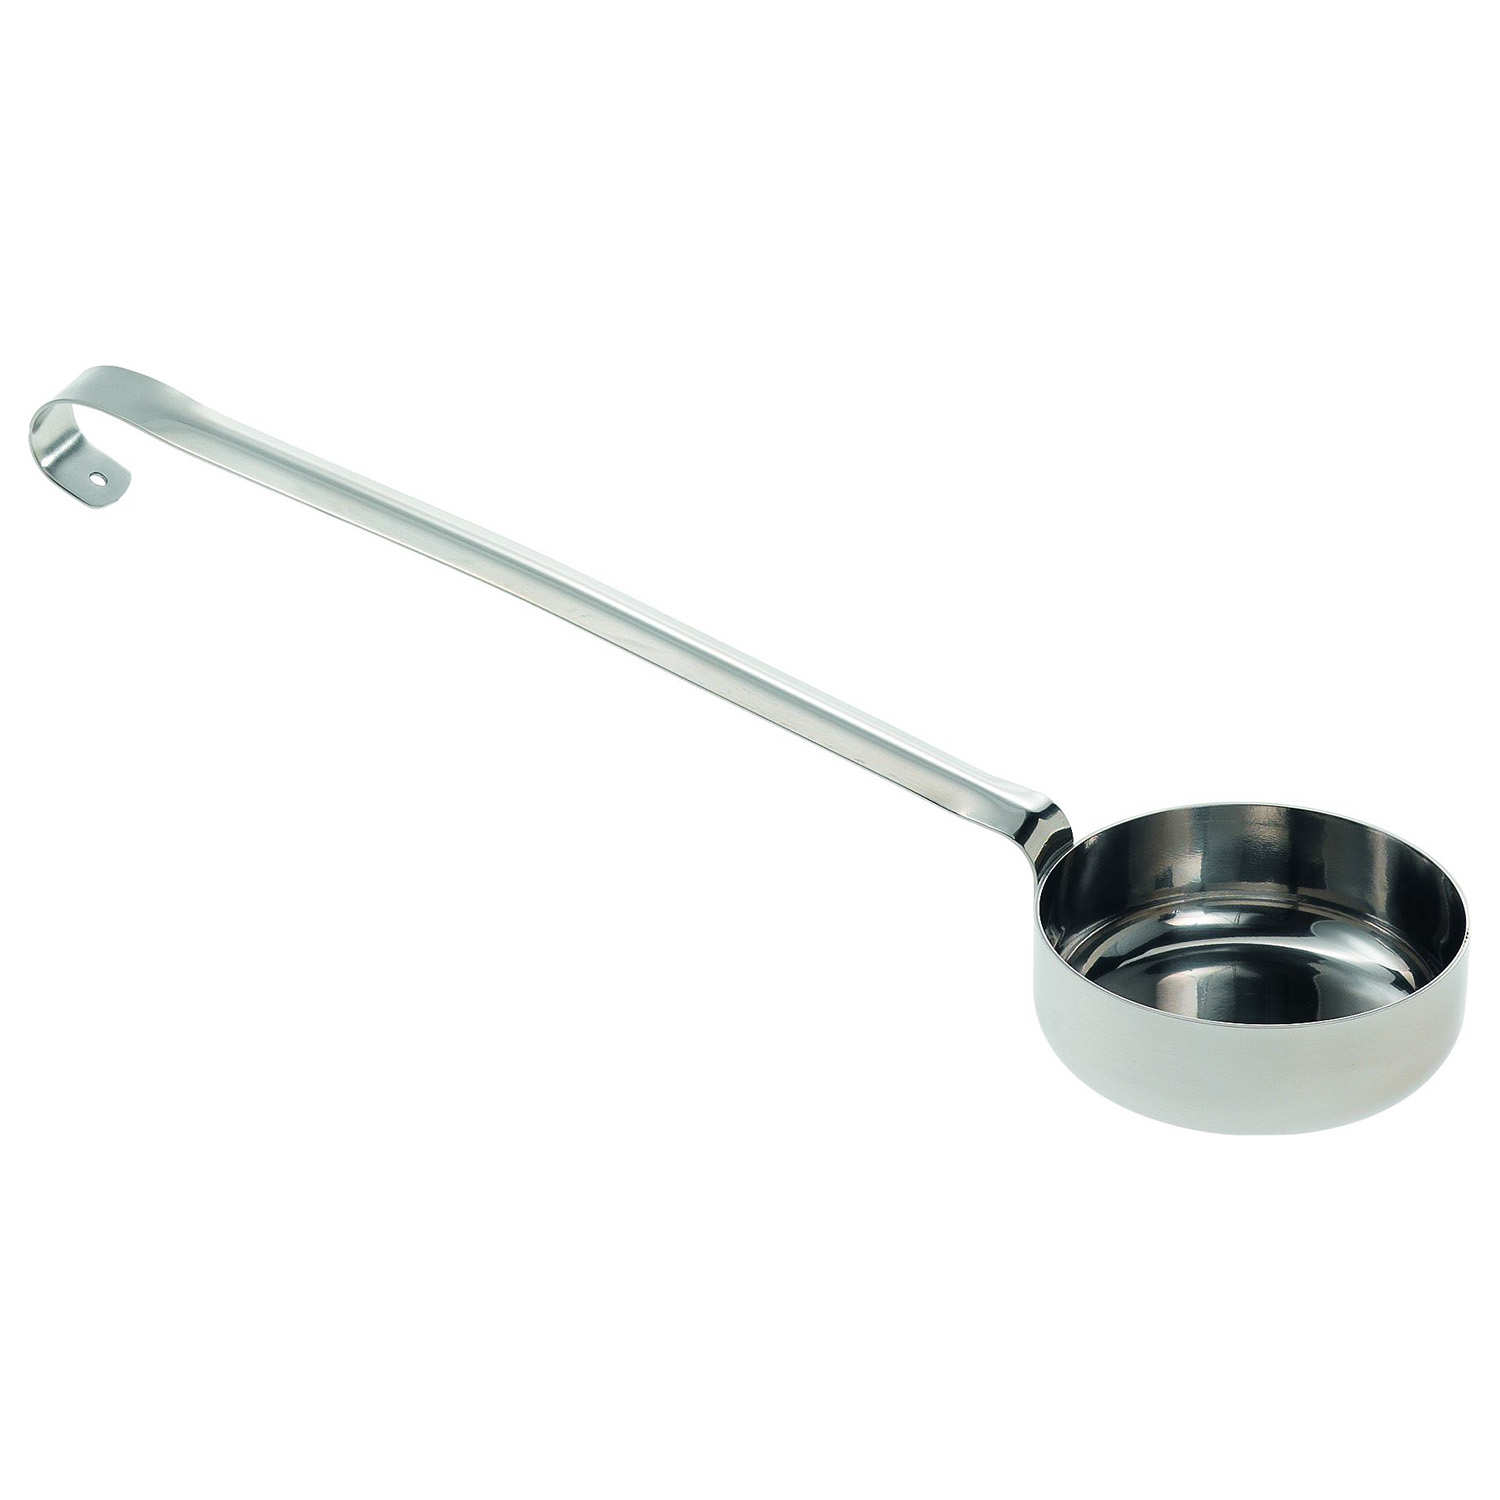 Stainless steel measuring ladle - Capacity 90g